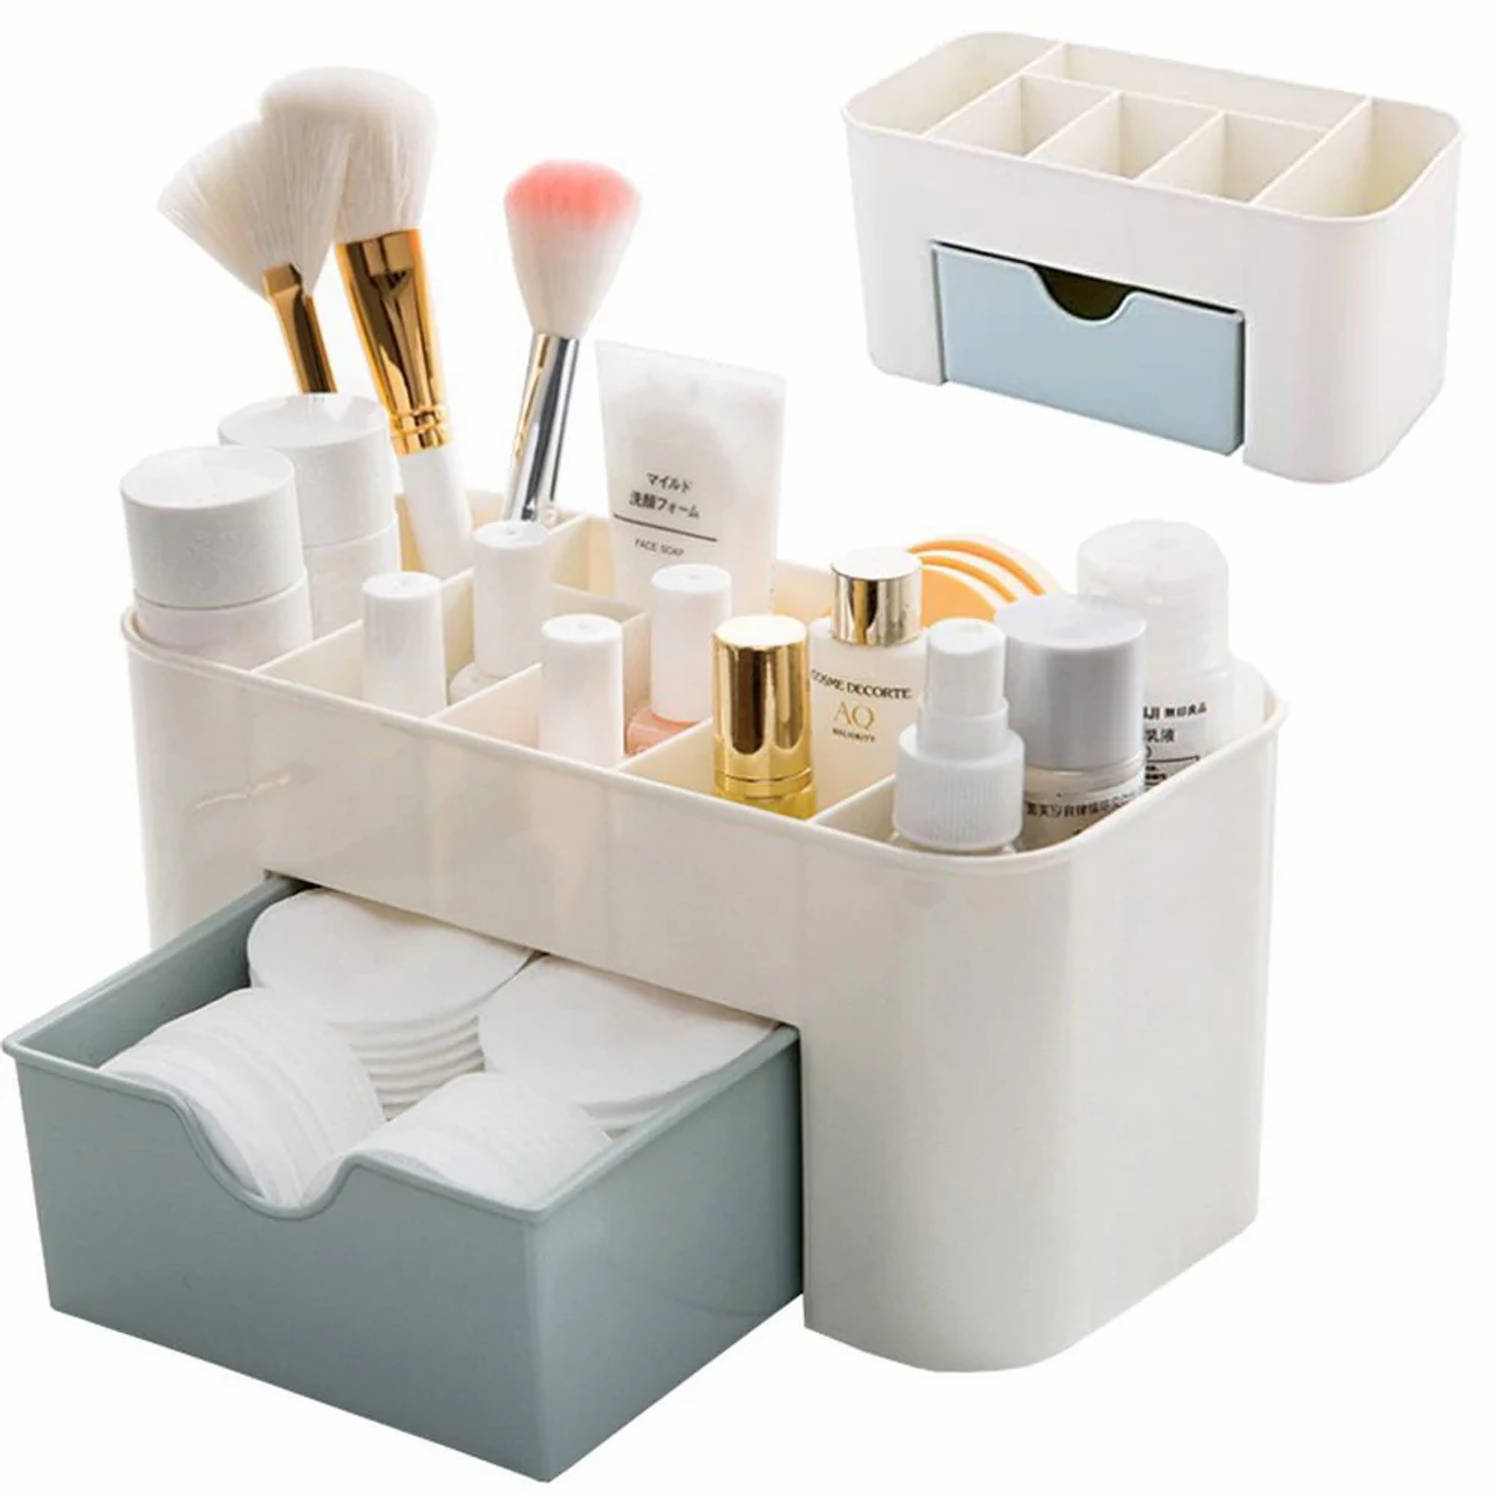 Make-up cosmetica organizer opbergdoos 6 sorteervakken inclusief lade 21 x 11 x 9.5 cm crème - Kleur Roze